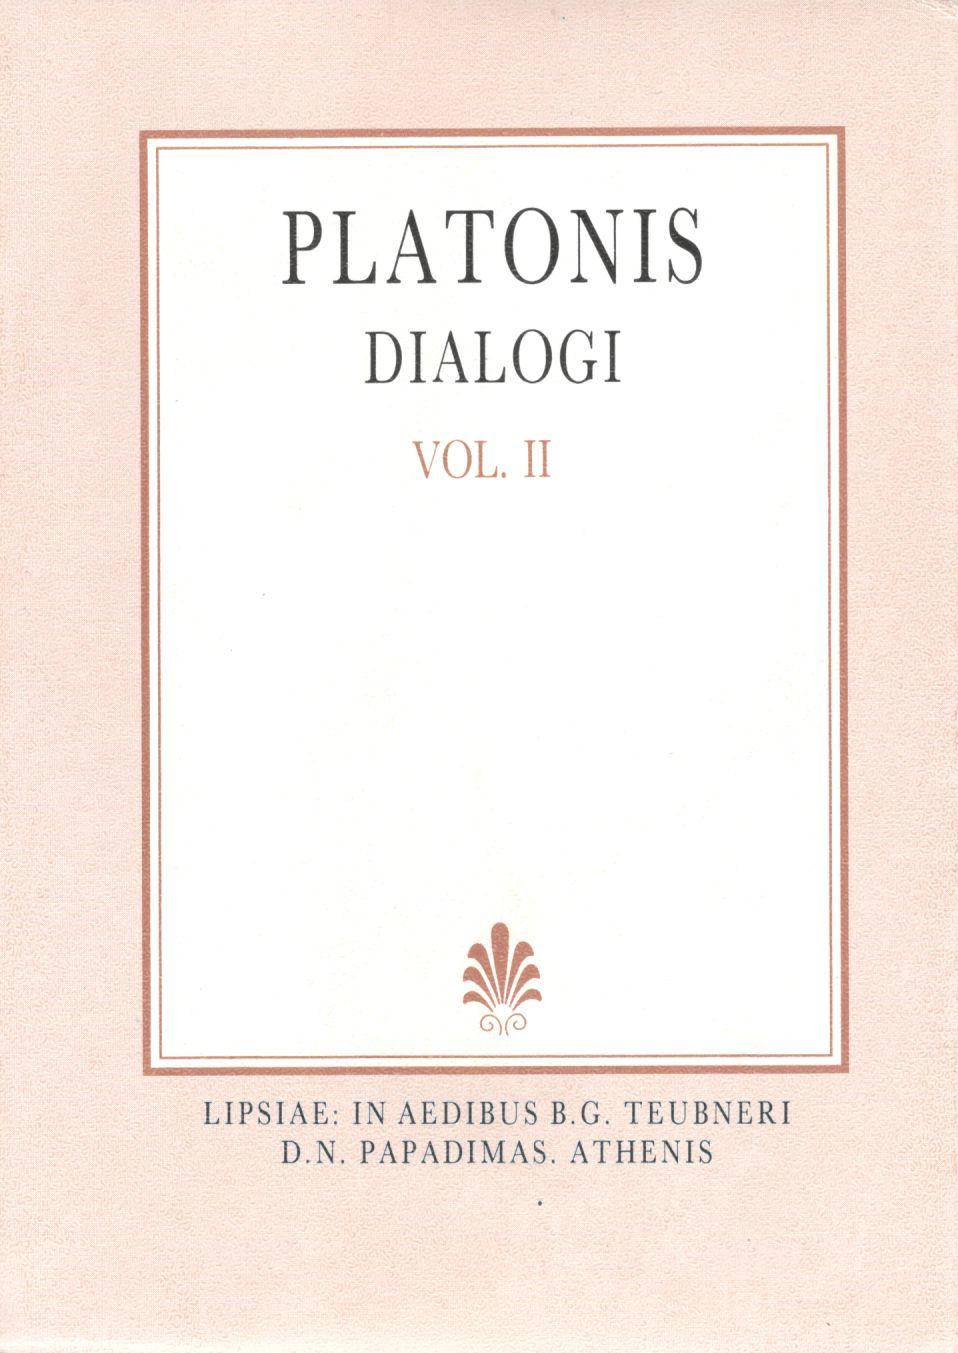 Platonis, Dialogi, Vol. II, [Πλάτωνος, Διάλογοι, τ. Β